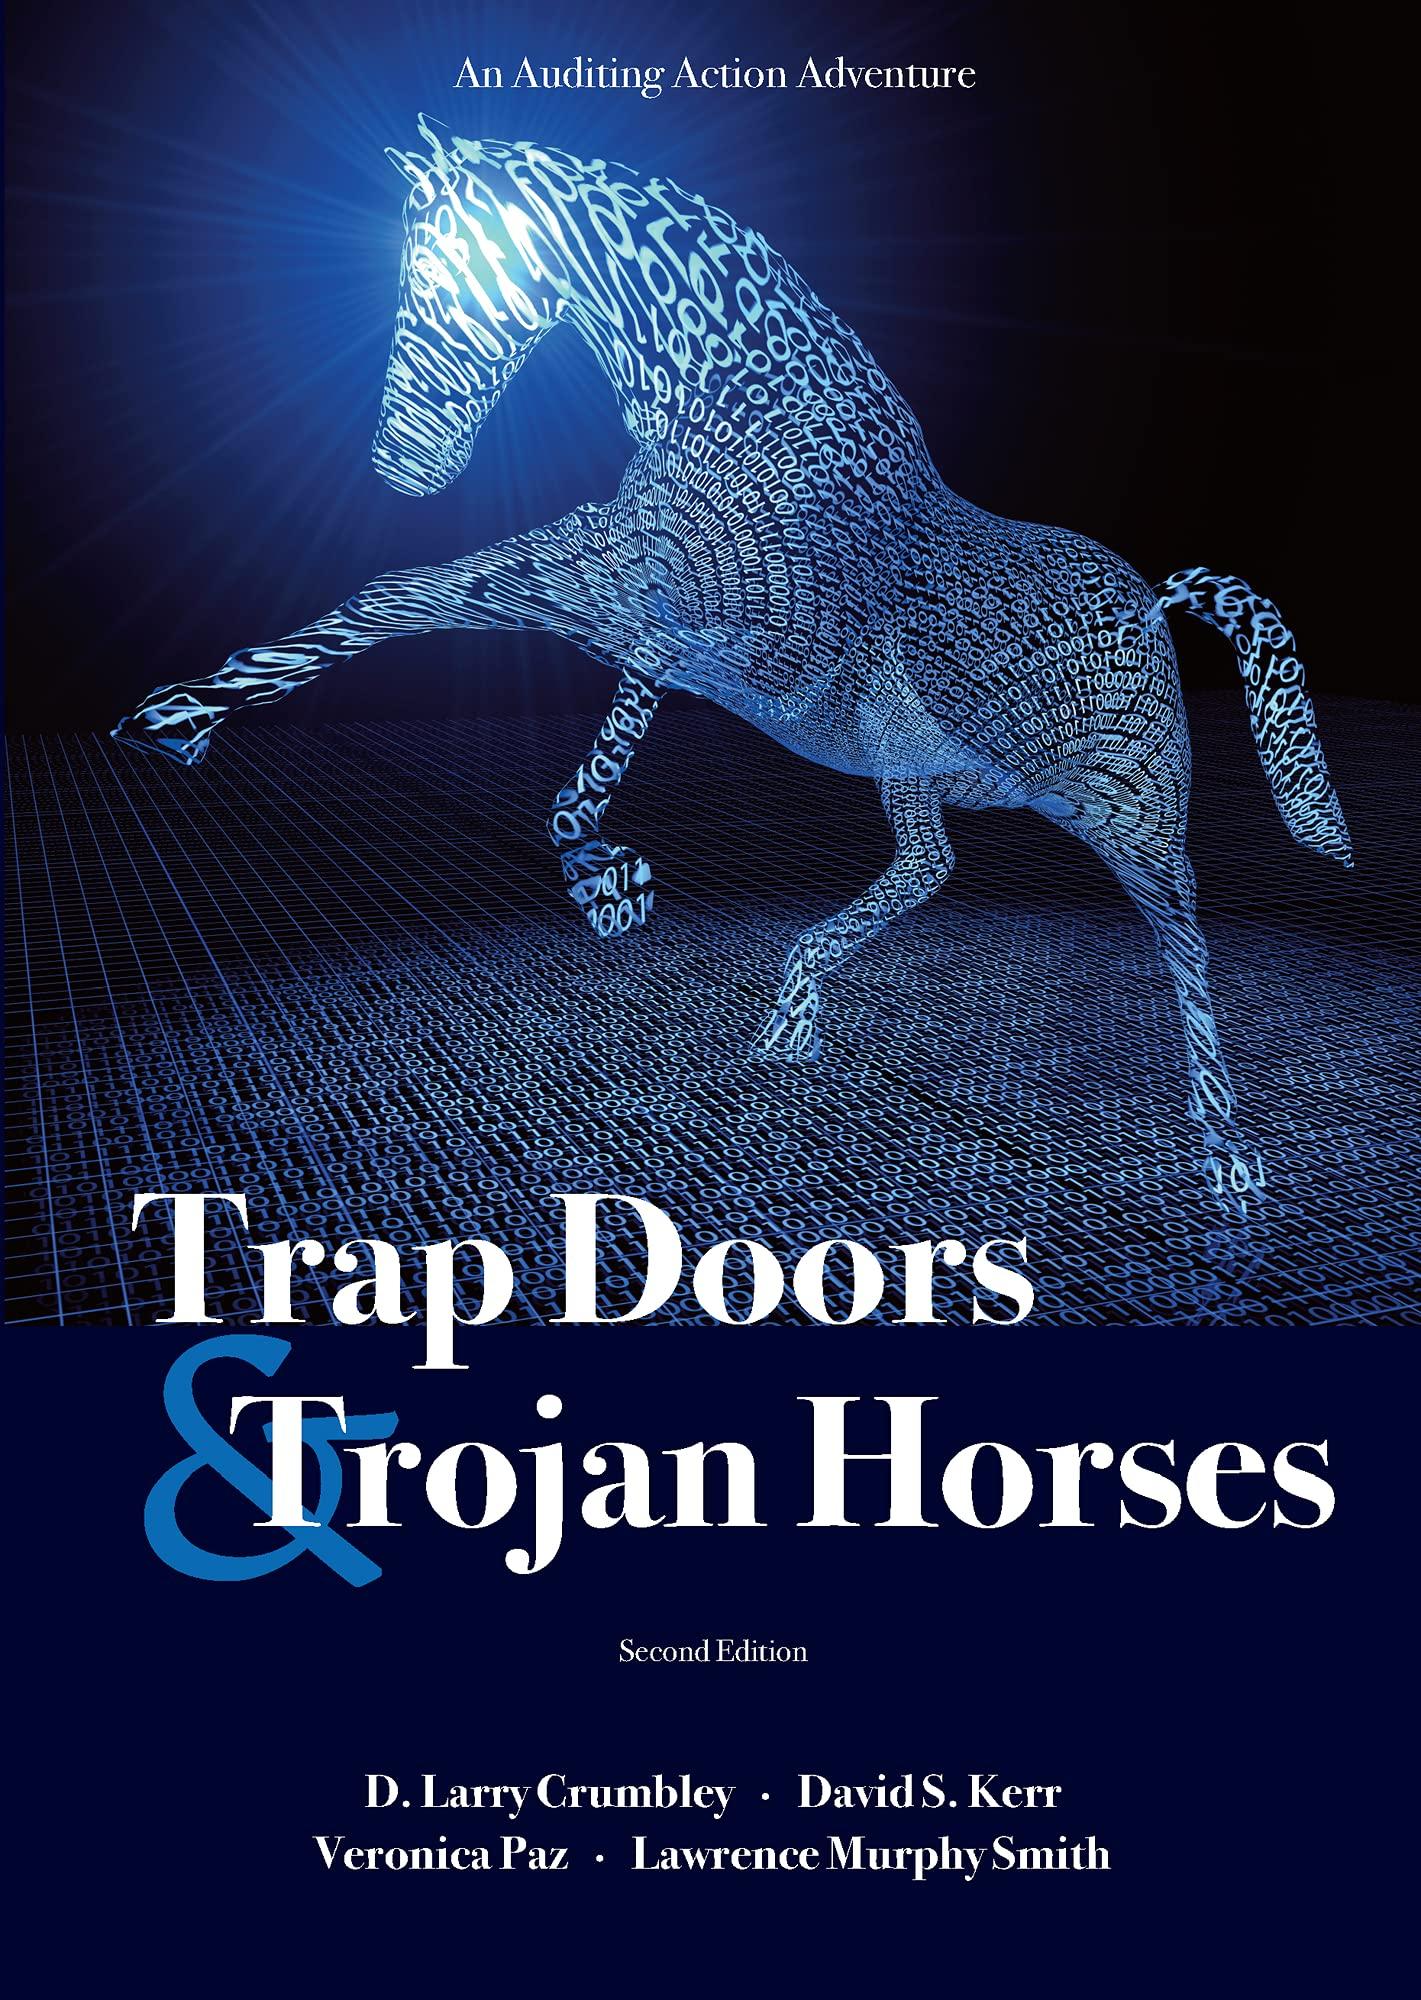 trap doors and trojan horses an auditing action adventure 1st edition d. larry crumbley, david kerr, veronica